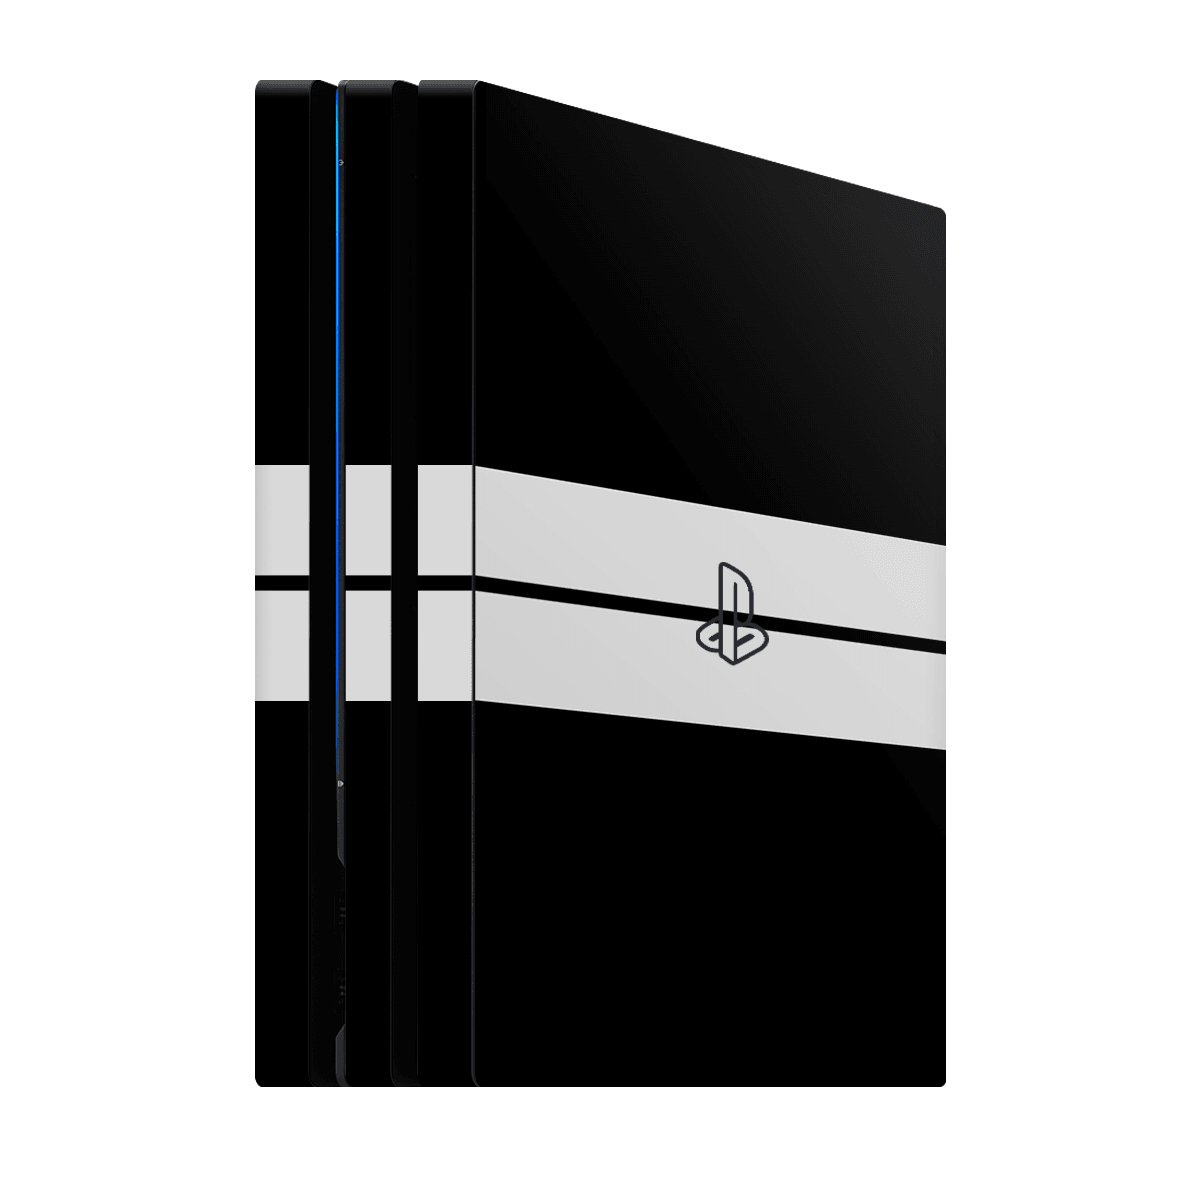 PlayStation 4 Pro Skin Two White Stripes on Black